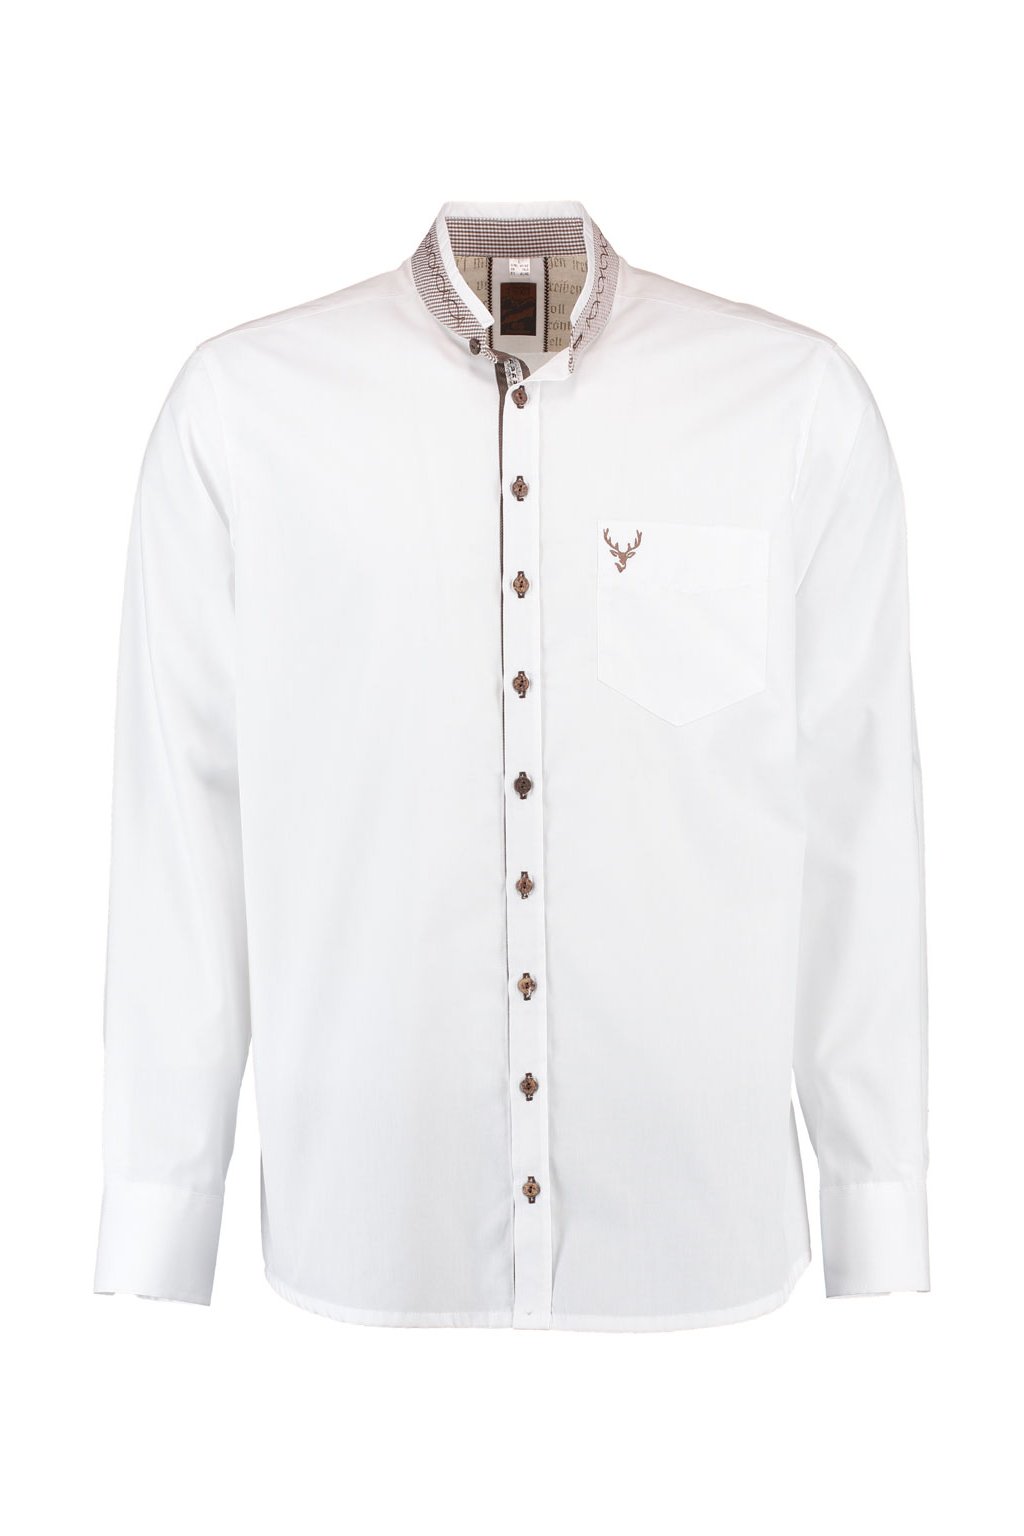 ORBIS - košile pánská bílá Slim Fit  s dl. rukávem (3684)